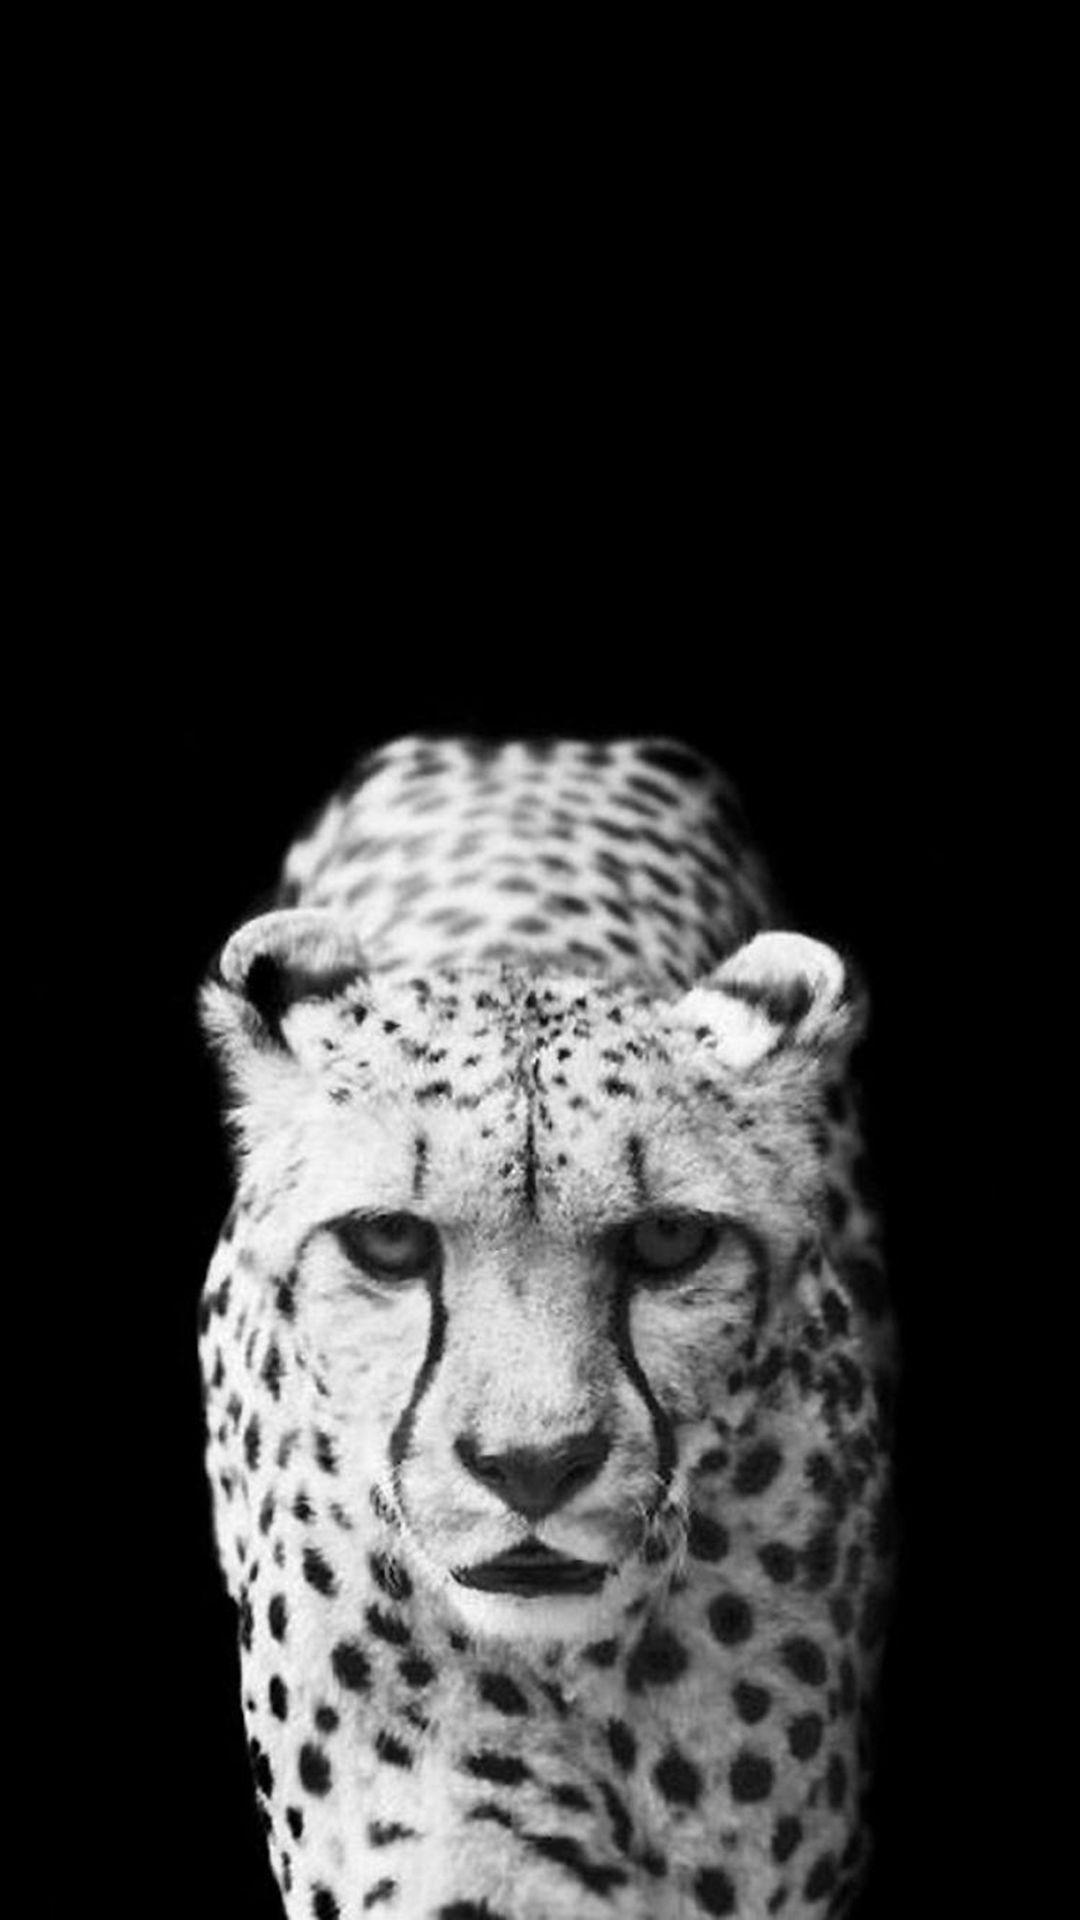 Download wallpaper 750x1334 wildlife relaxed predator sleep cheetah  iphone 7 iphone 8 750x1334 hd background 6825